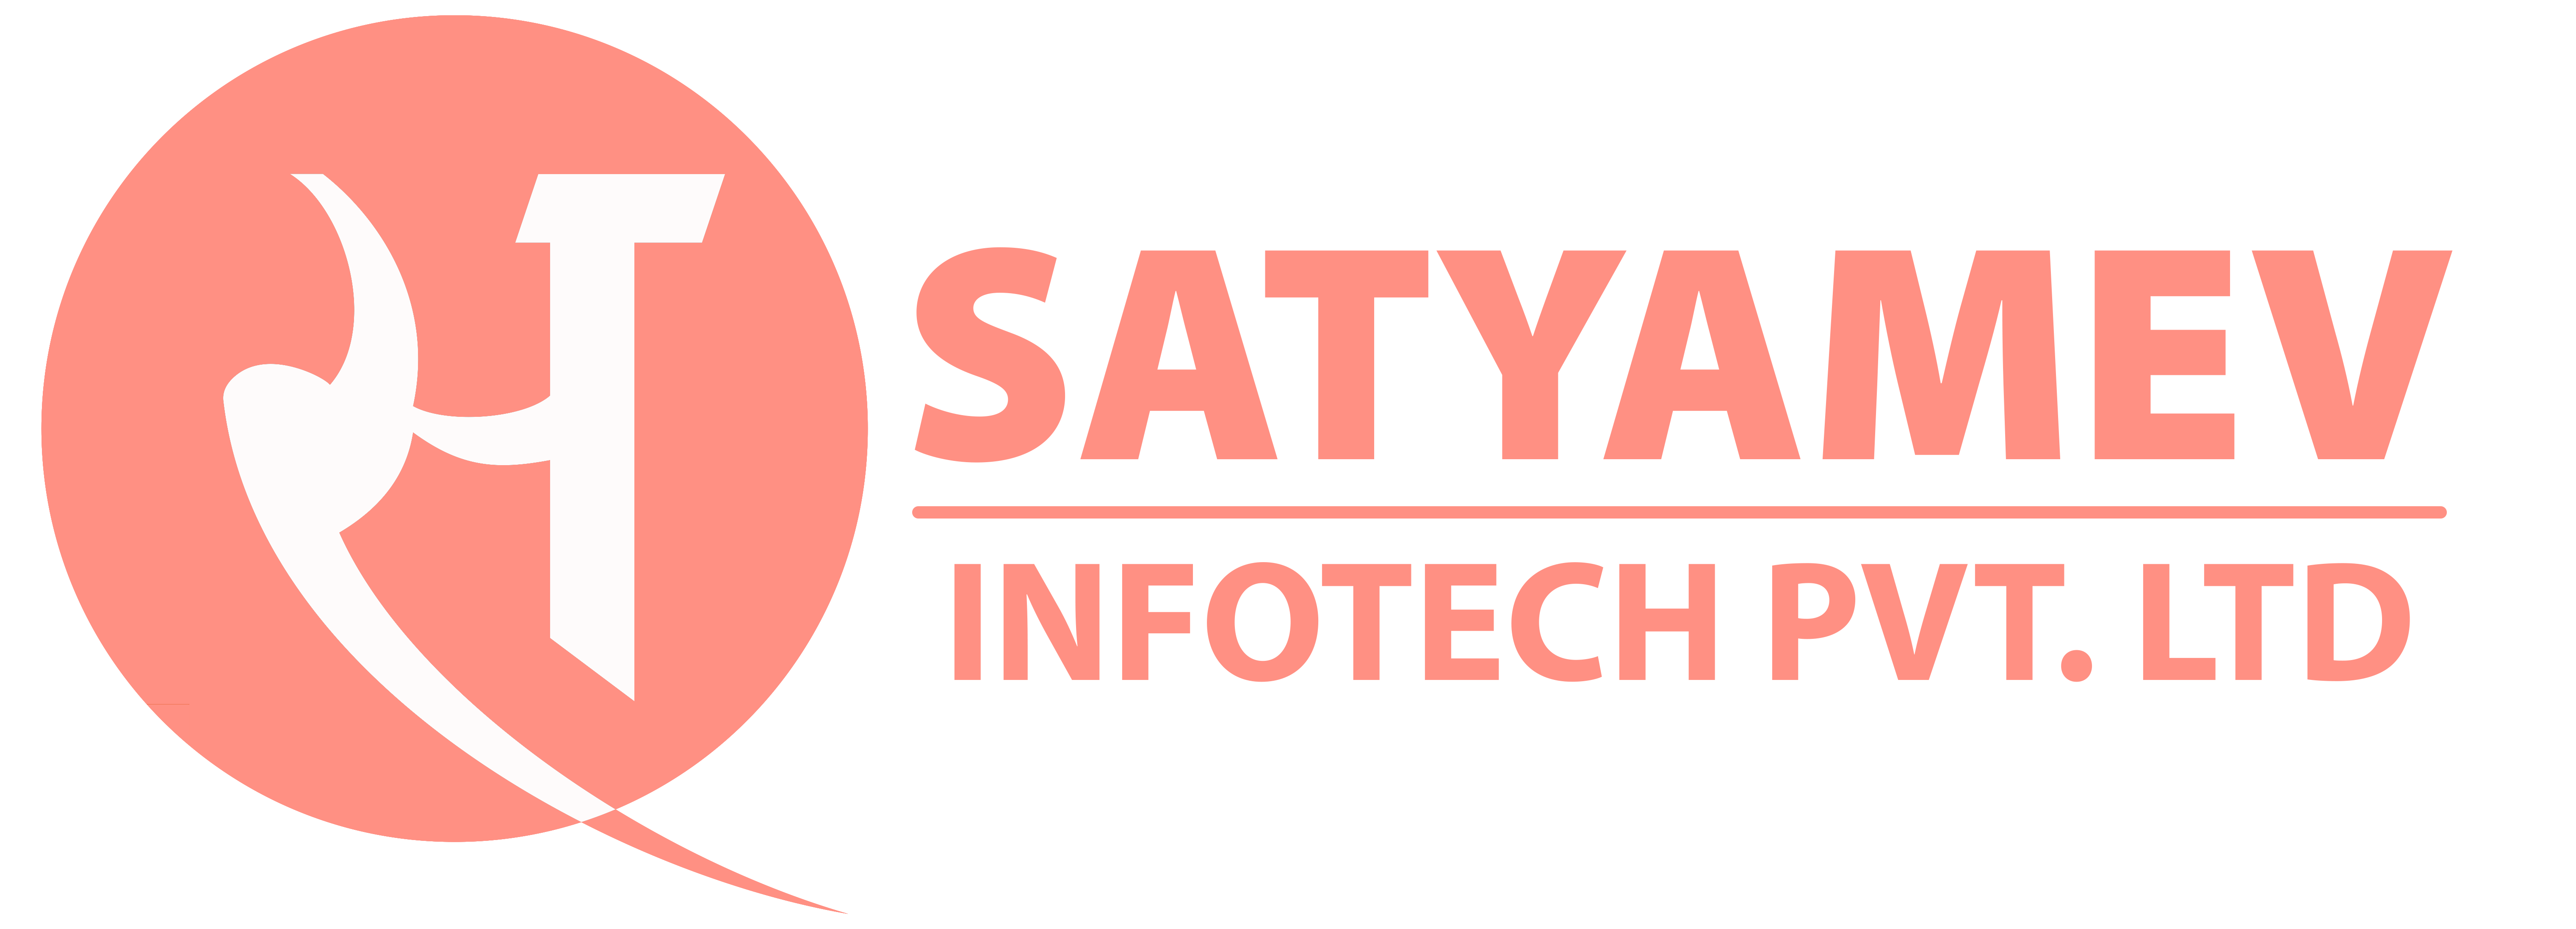 Satyamev Infotech Pvt Ltd